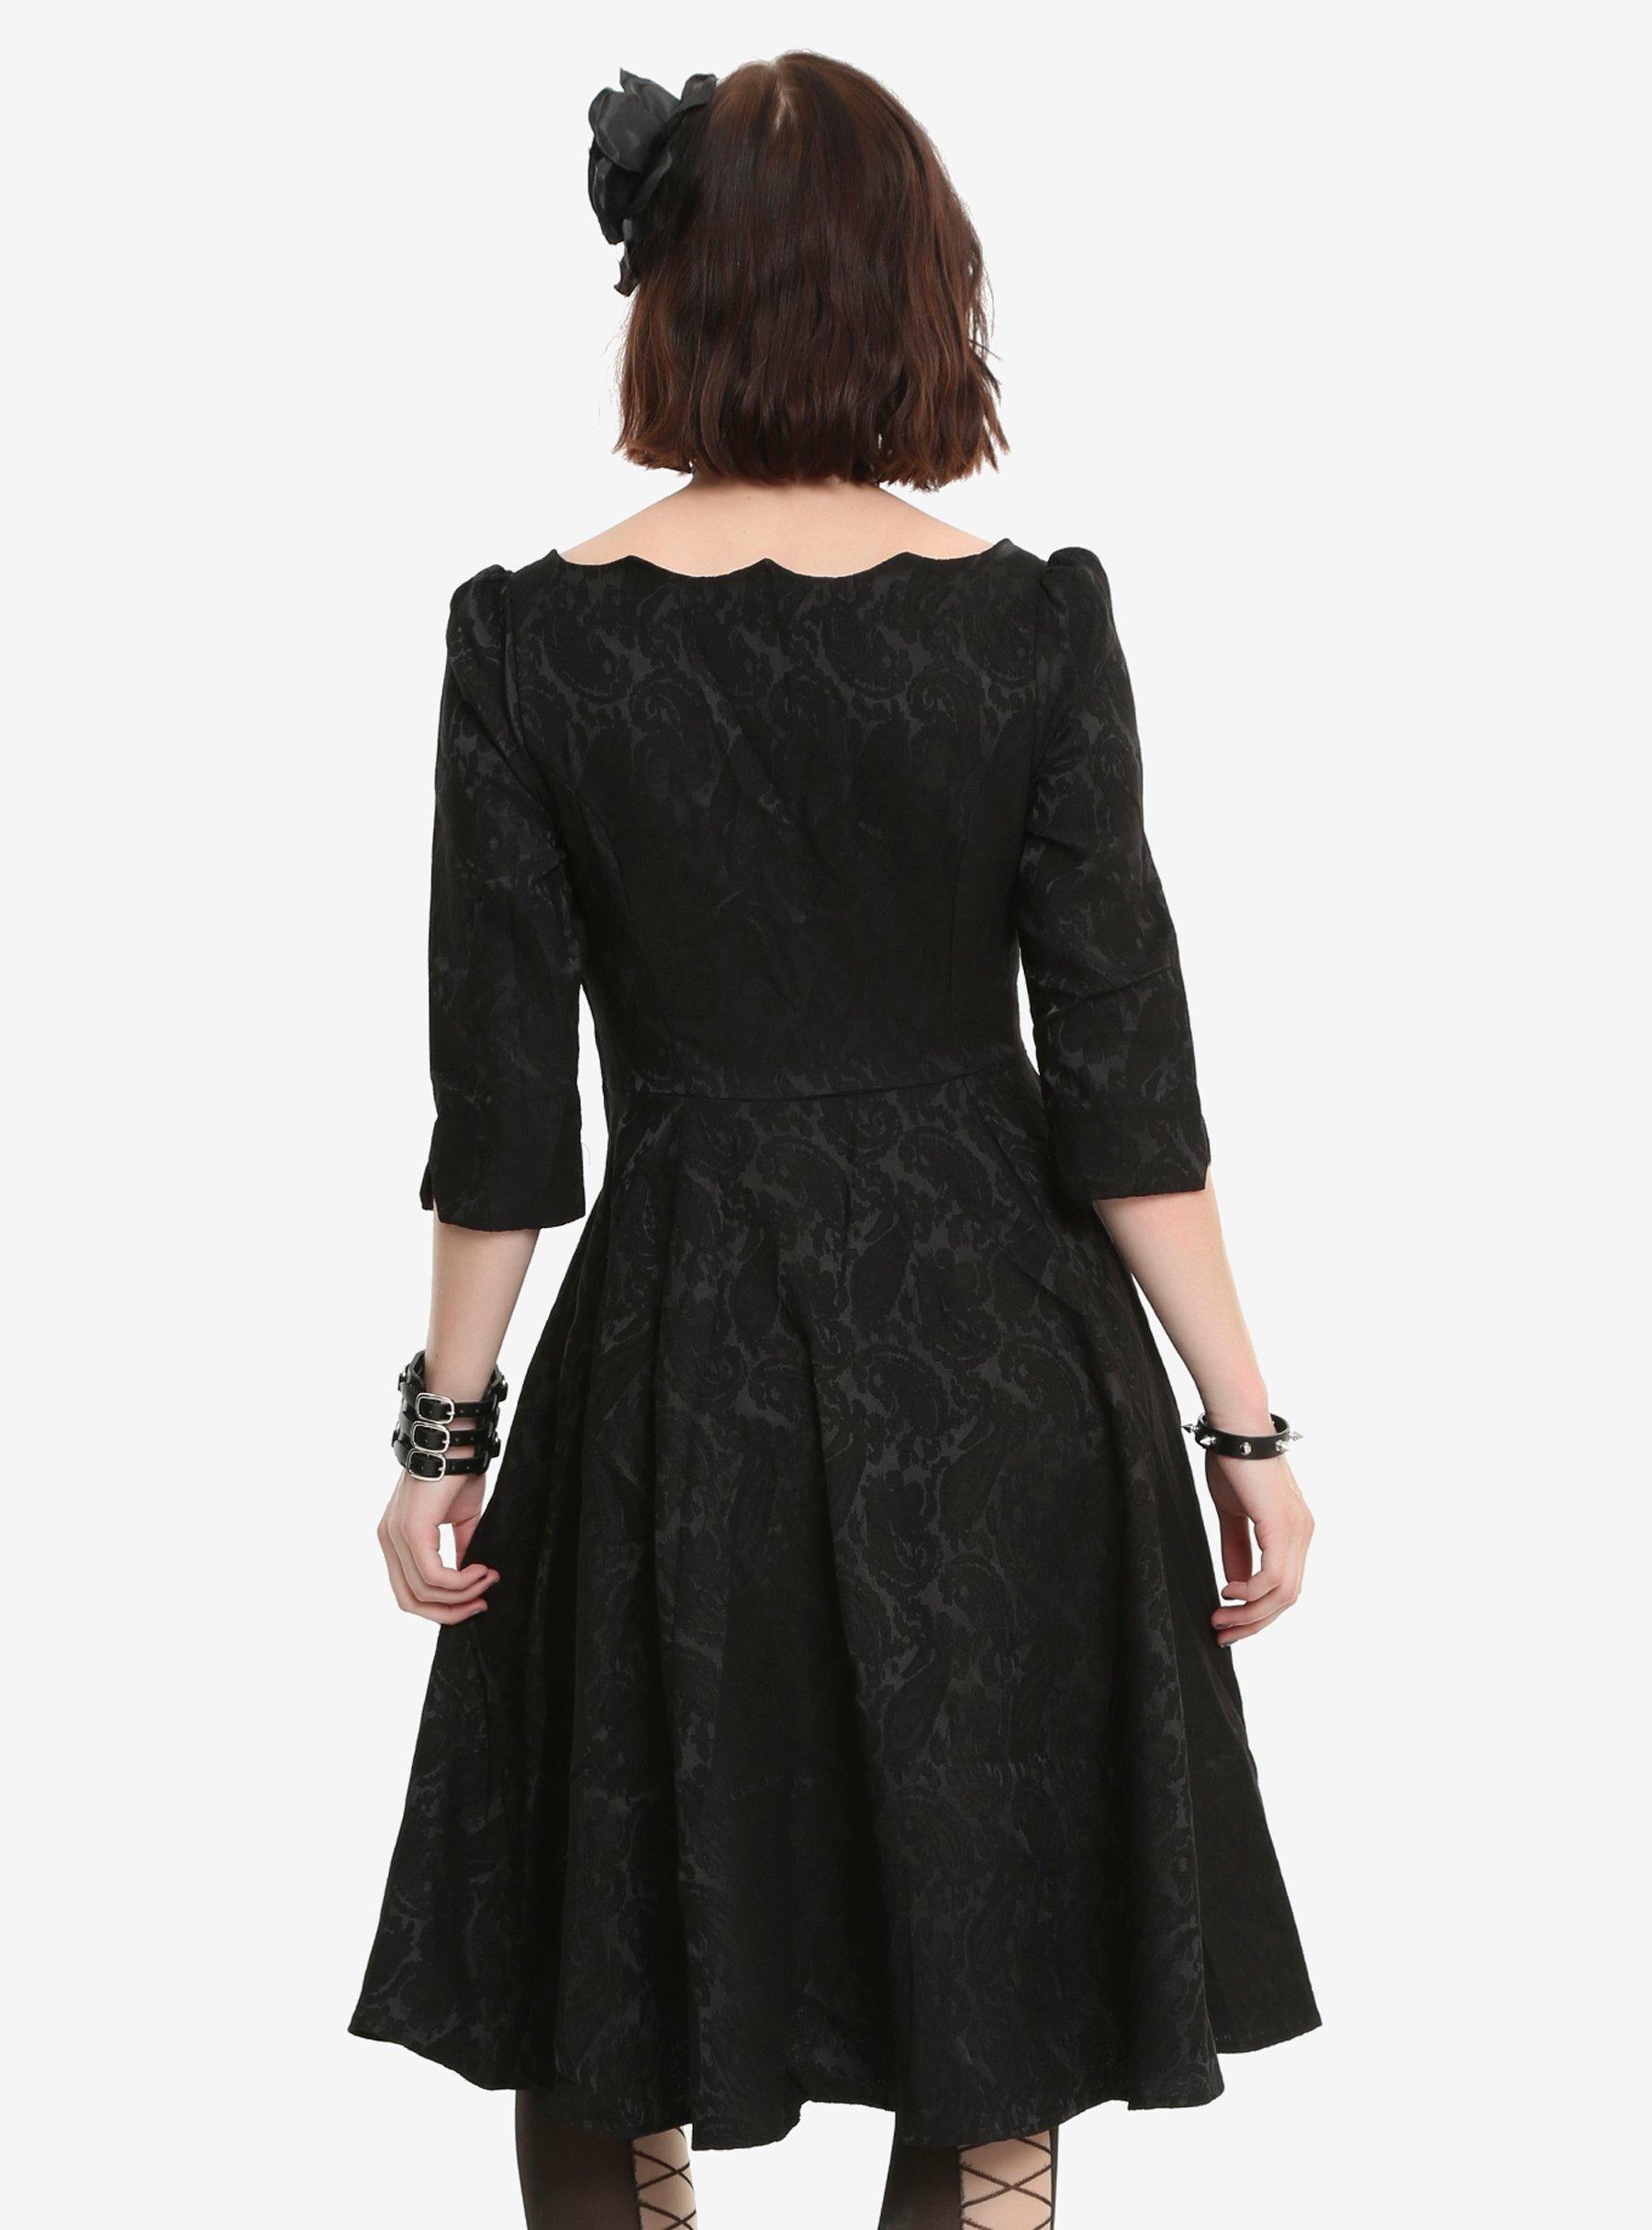 Black Brocade Scalloped Neckline Swing Dress, , alternate